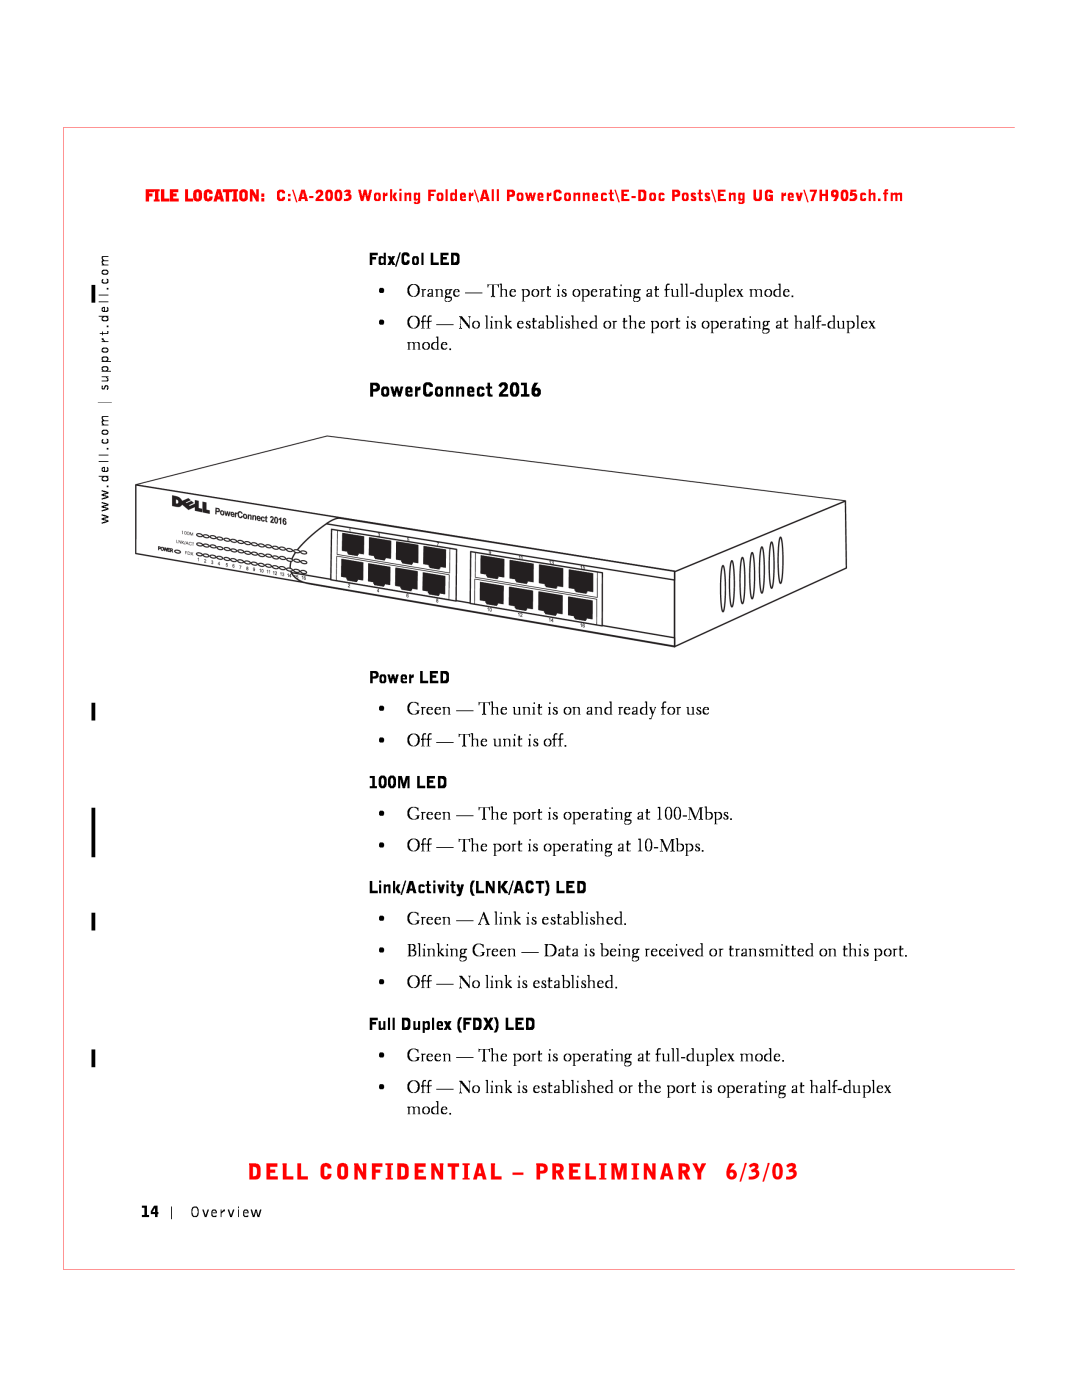 Dell 2016, 2024 manual DELL CONFIDENTIAL - PRELIMINARY 6/3/03, PowerConnect 